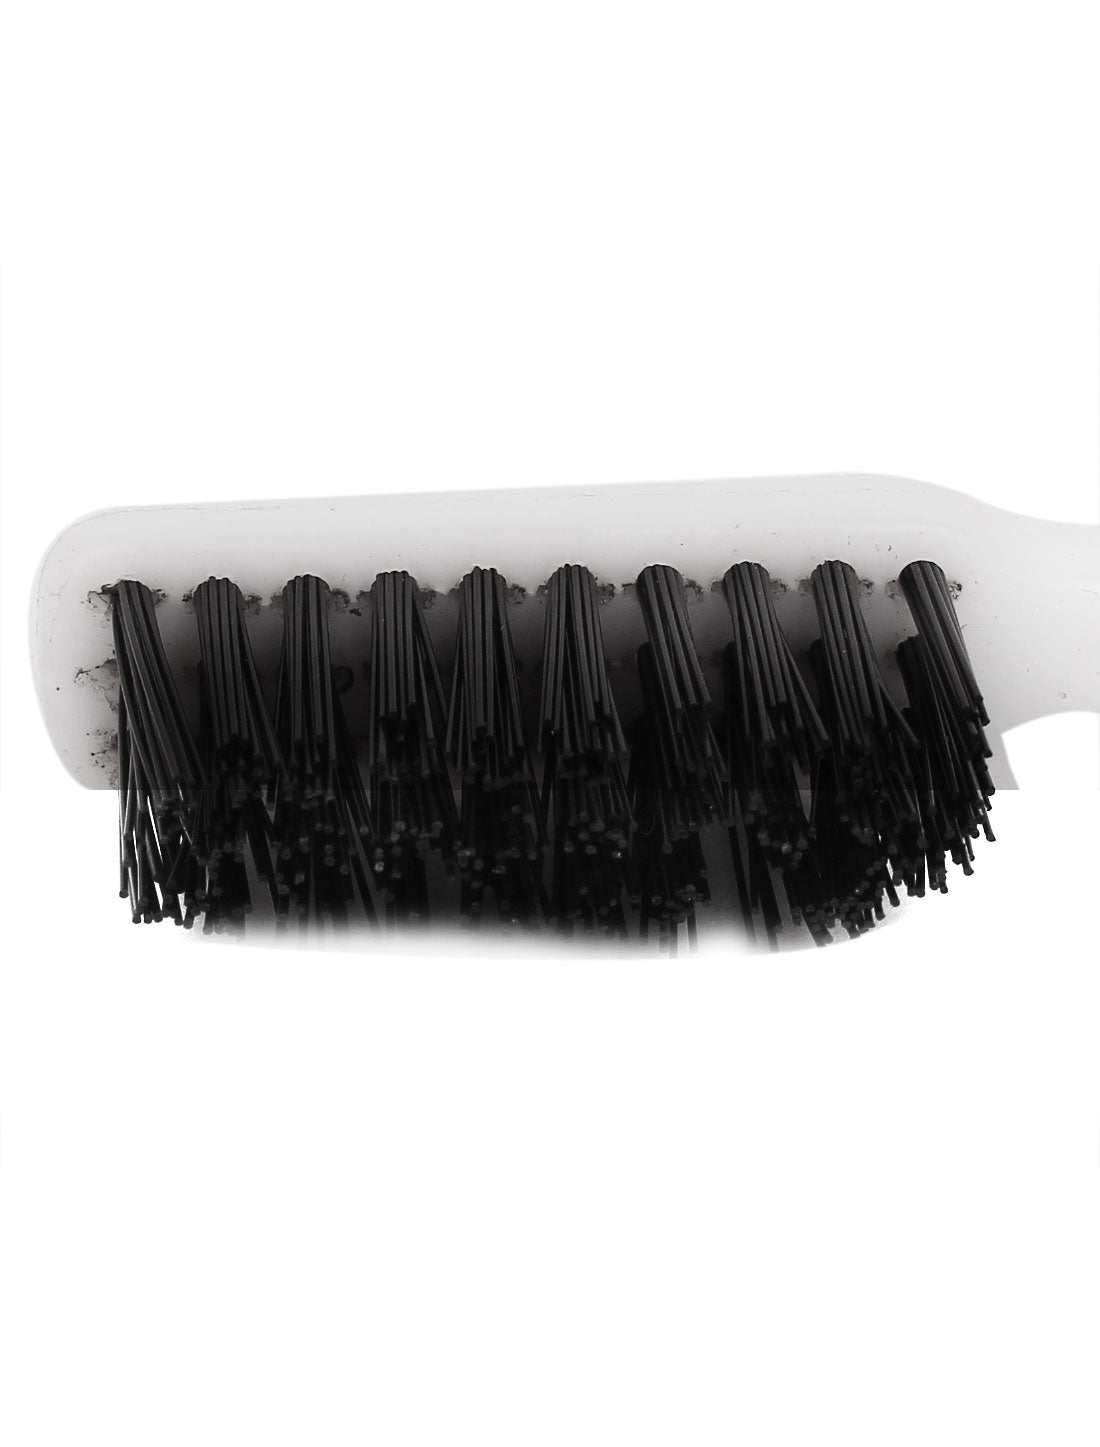 uxcell Uxcell 18cm Long Handheld Plastic Handle Nylon Cleaning Brush Black White 20 Pcs